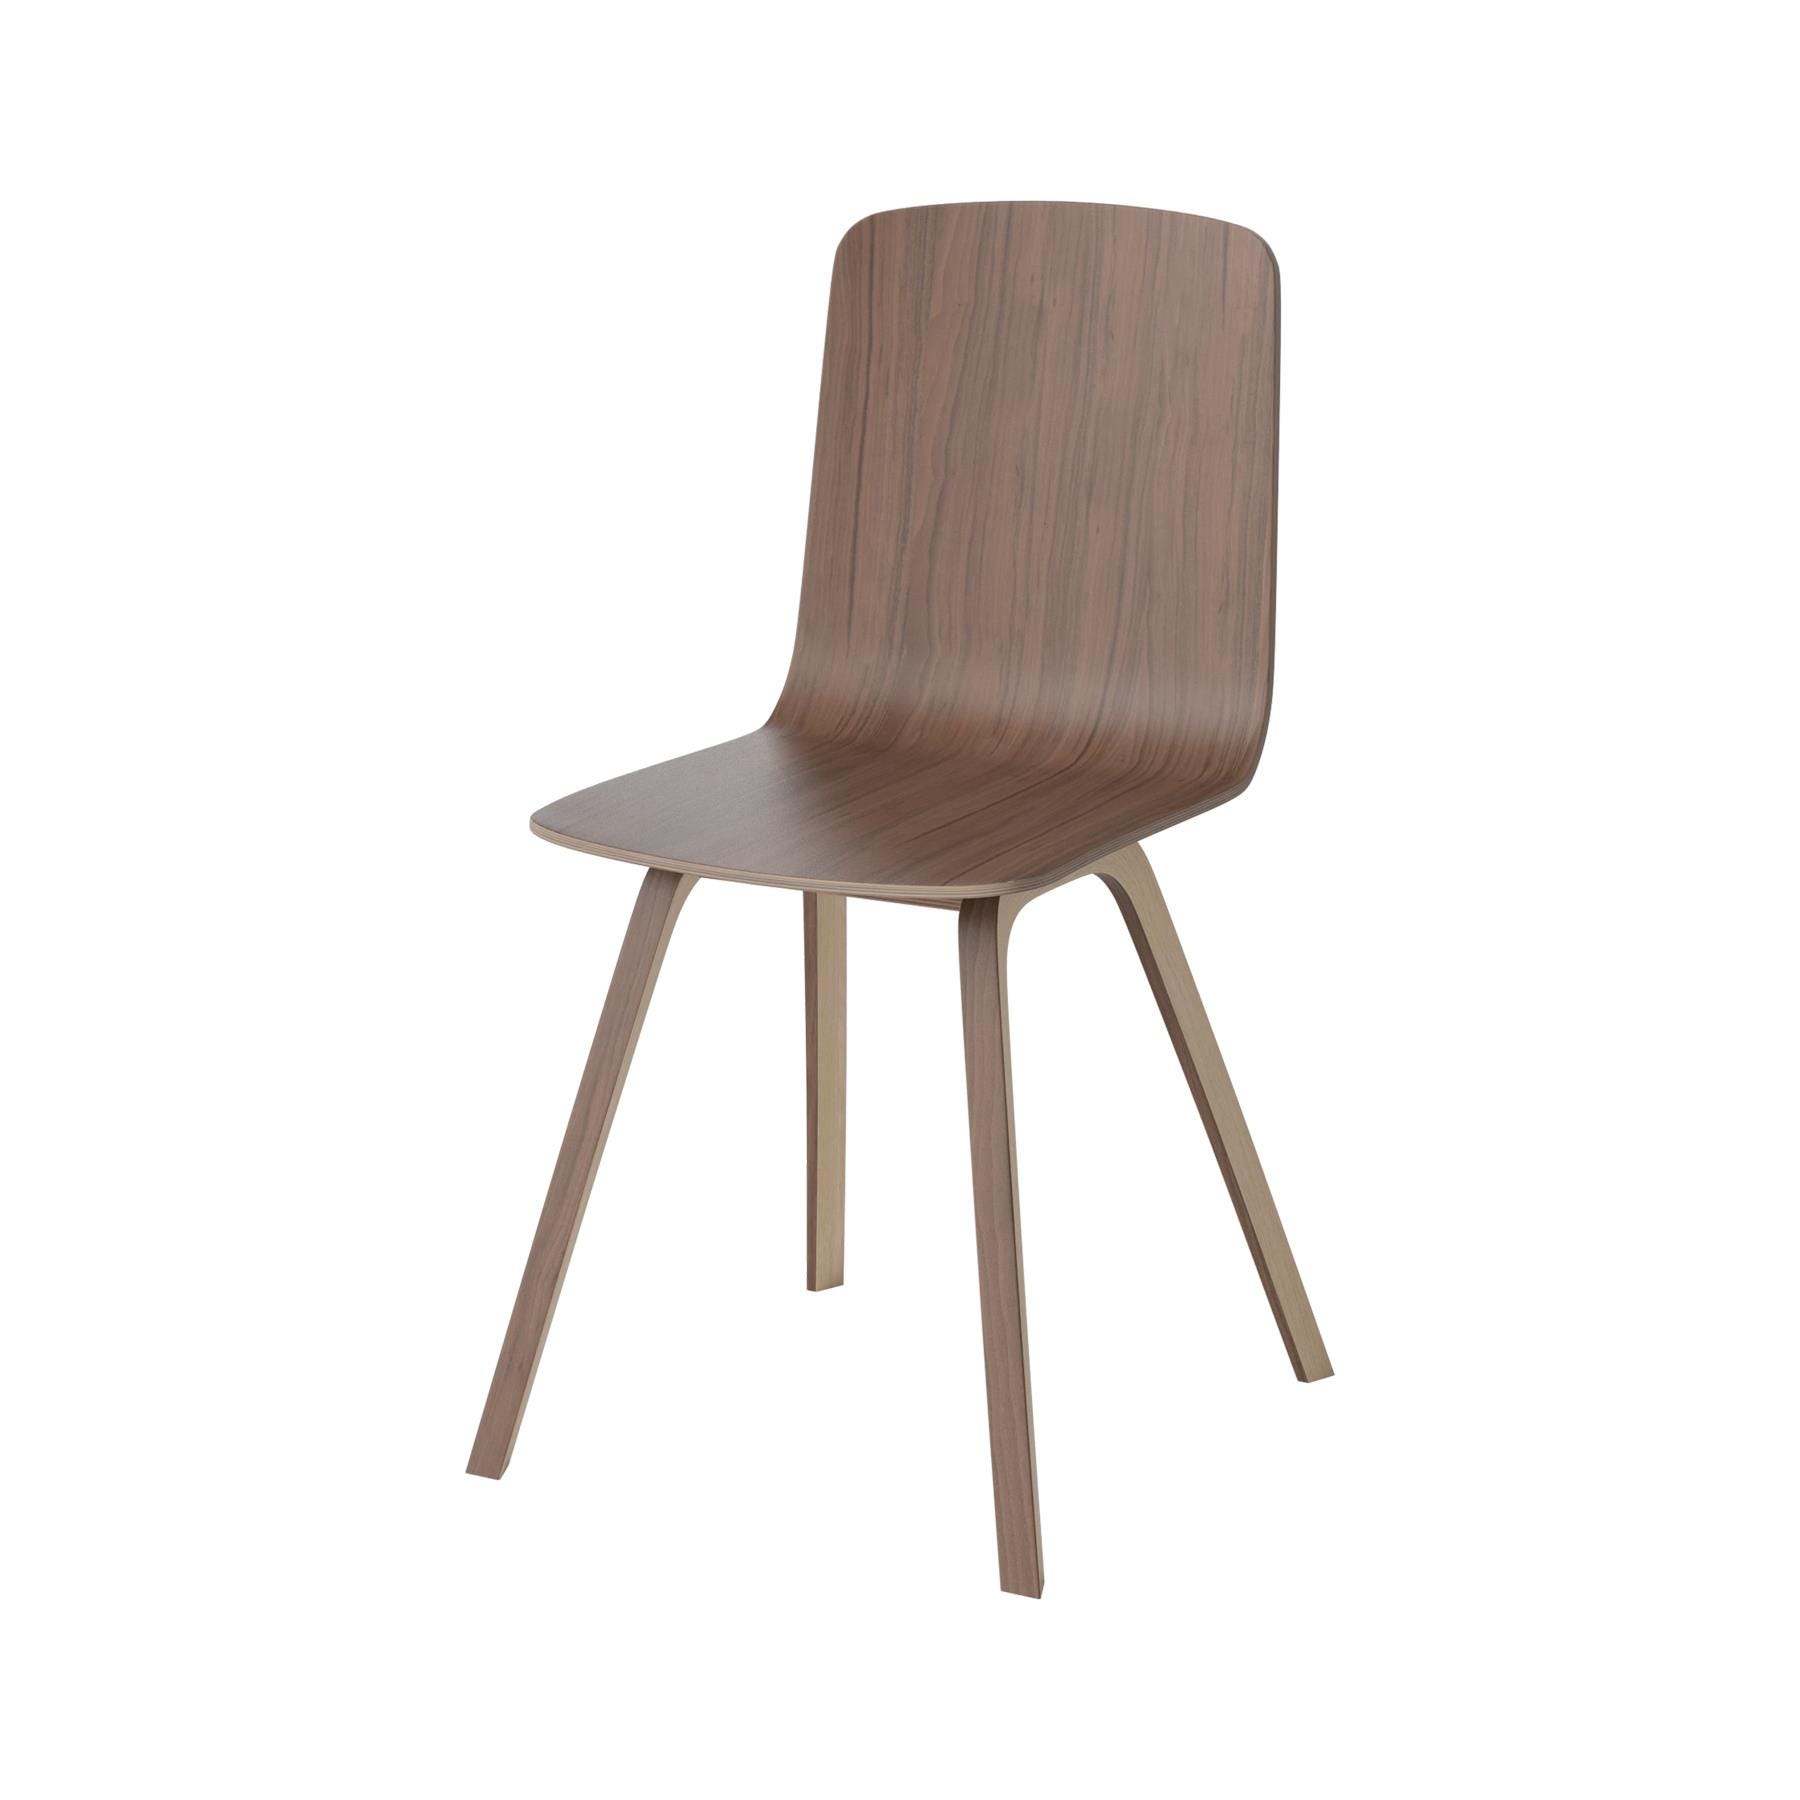 Bolia Palm Dining Chair Wood Veneer Legs Oiled Walnut Dark Wood Designer Furniture From Holloways Of Ludlow